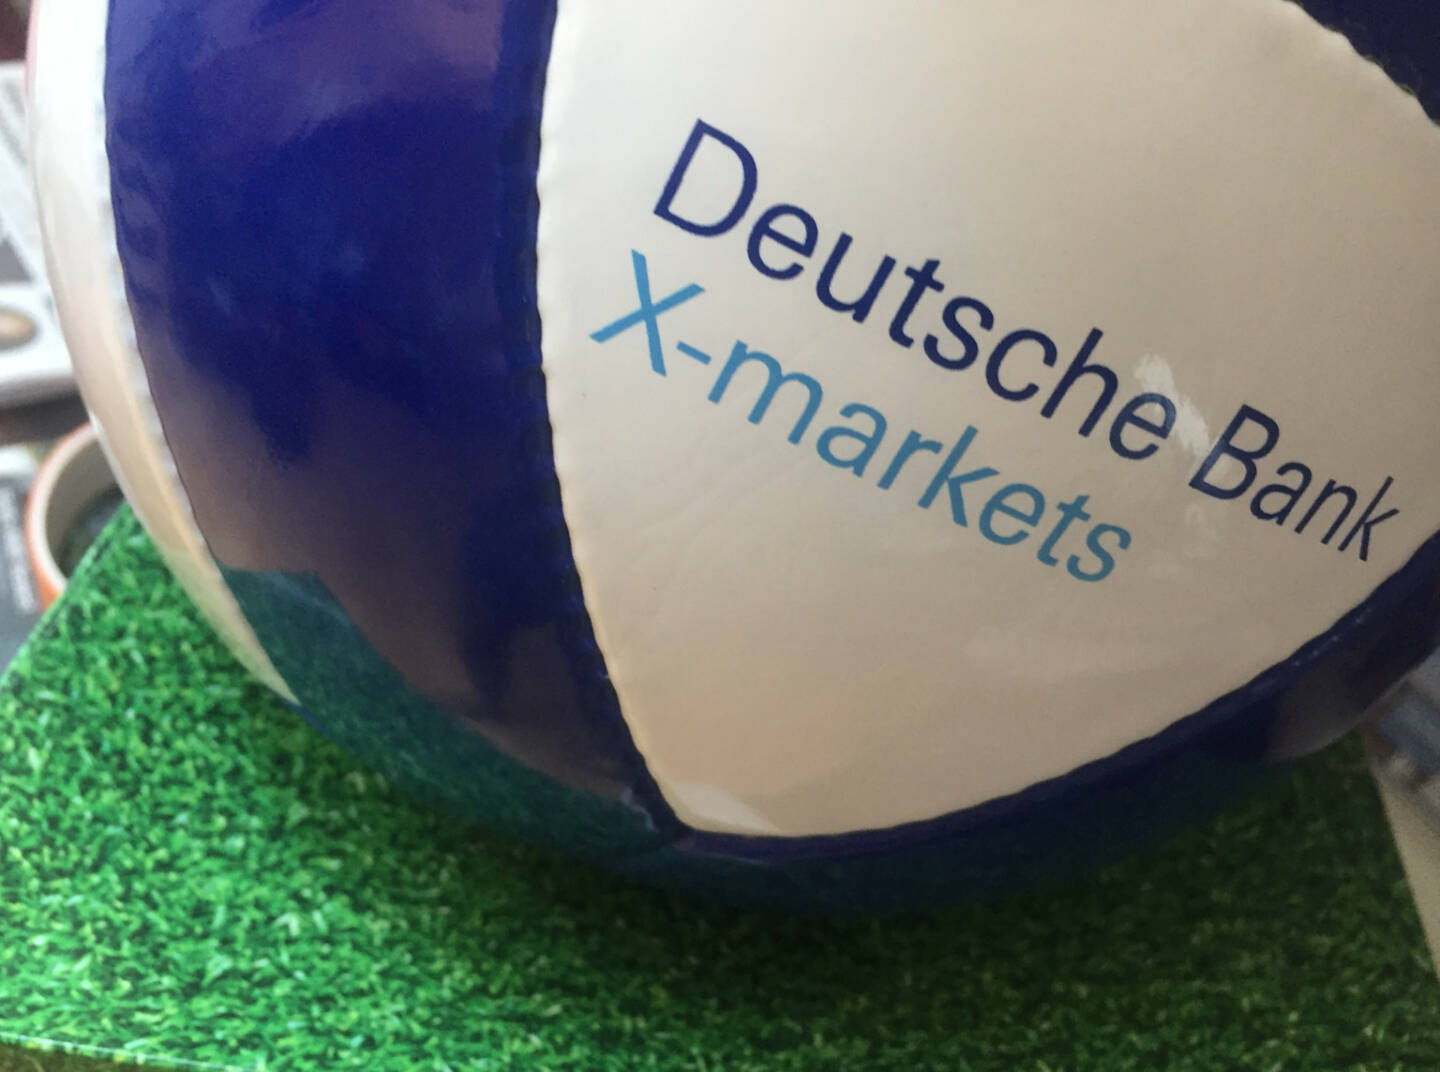 Deutsche Bank X-markets Fussball